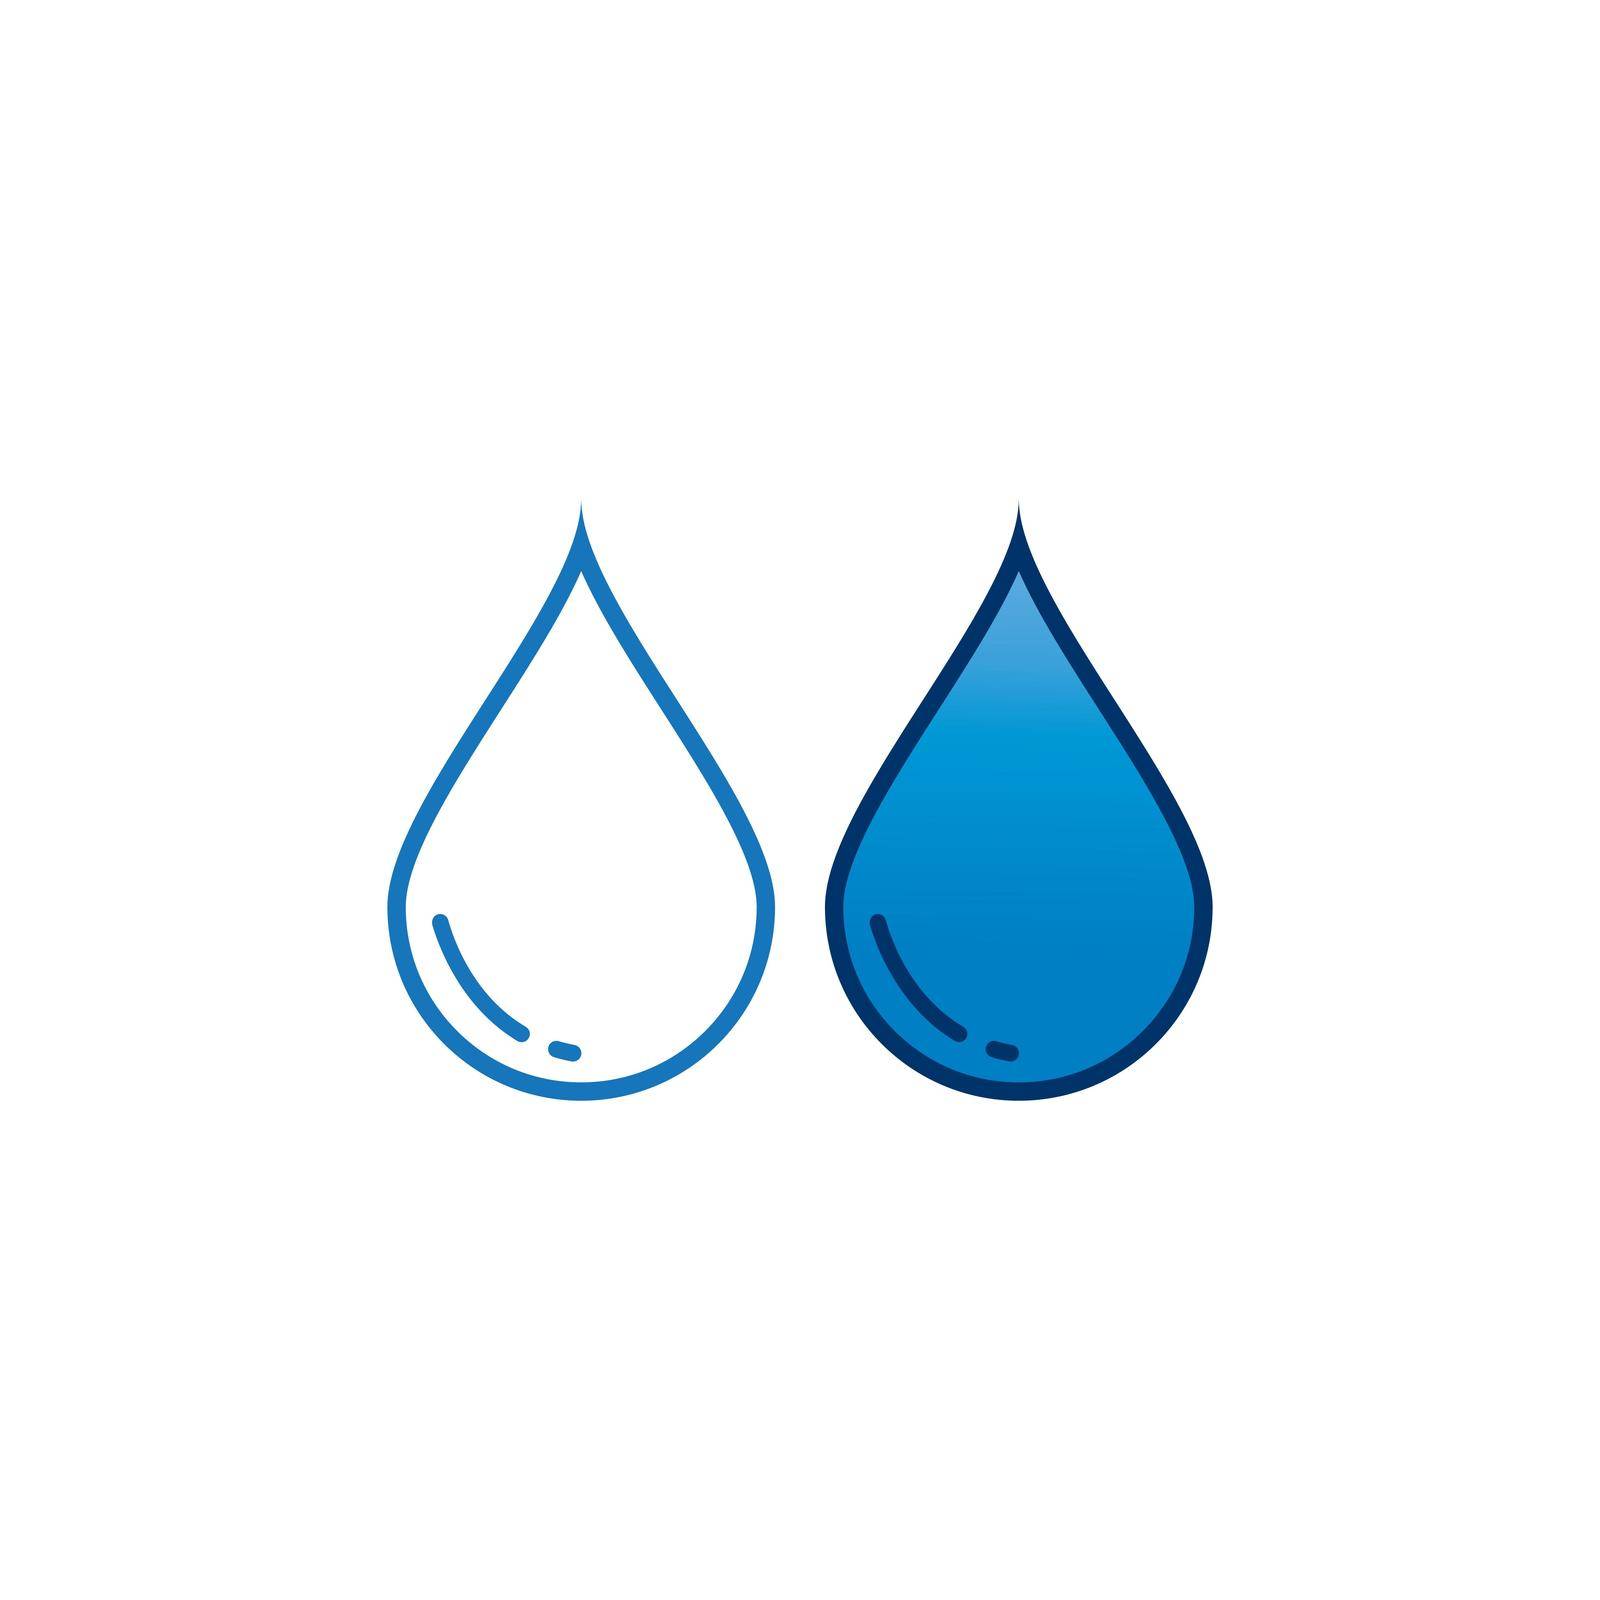 Water drop logo. vector illustration symbol design.